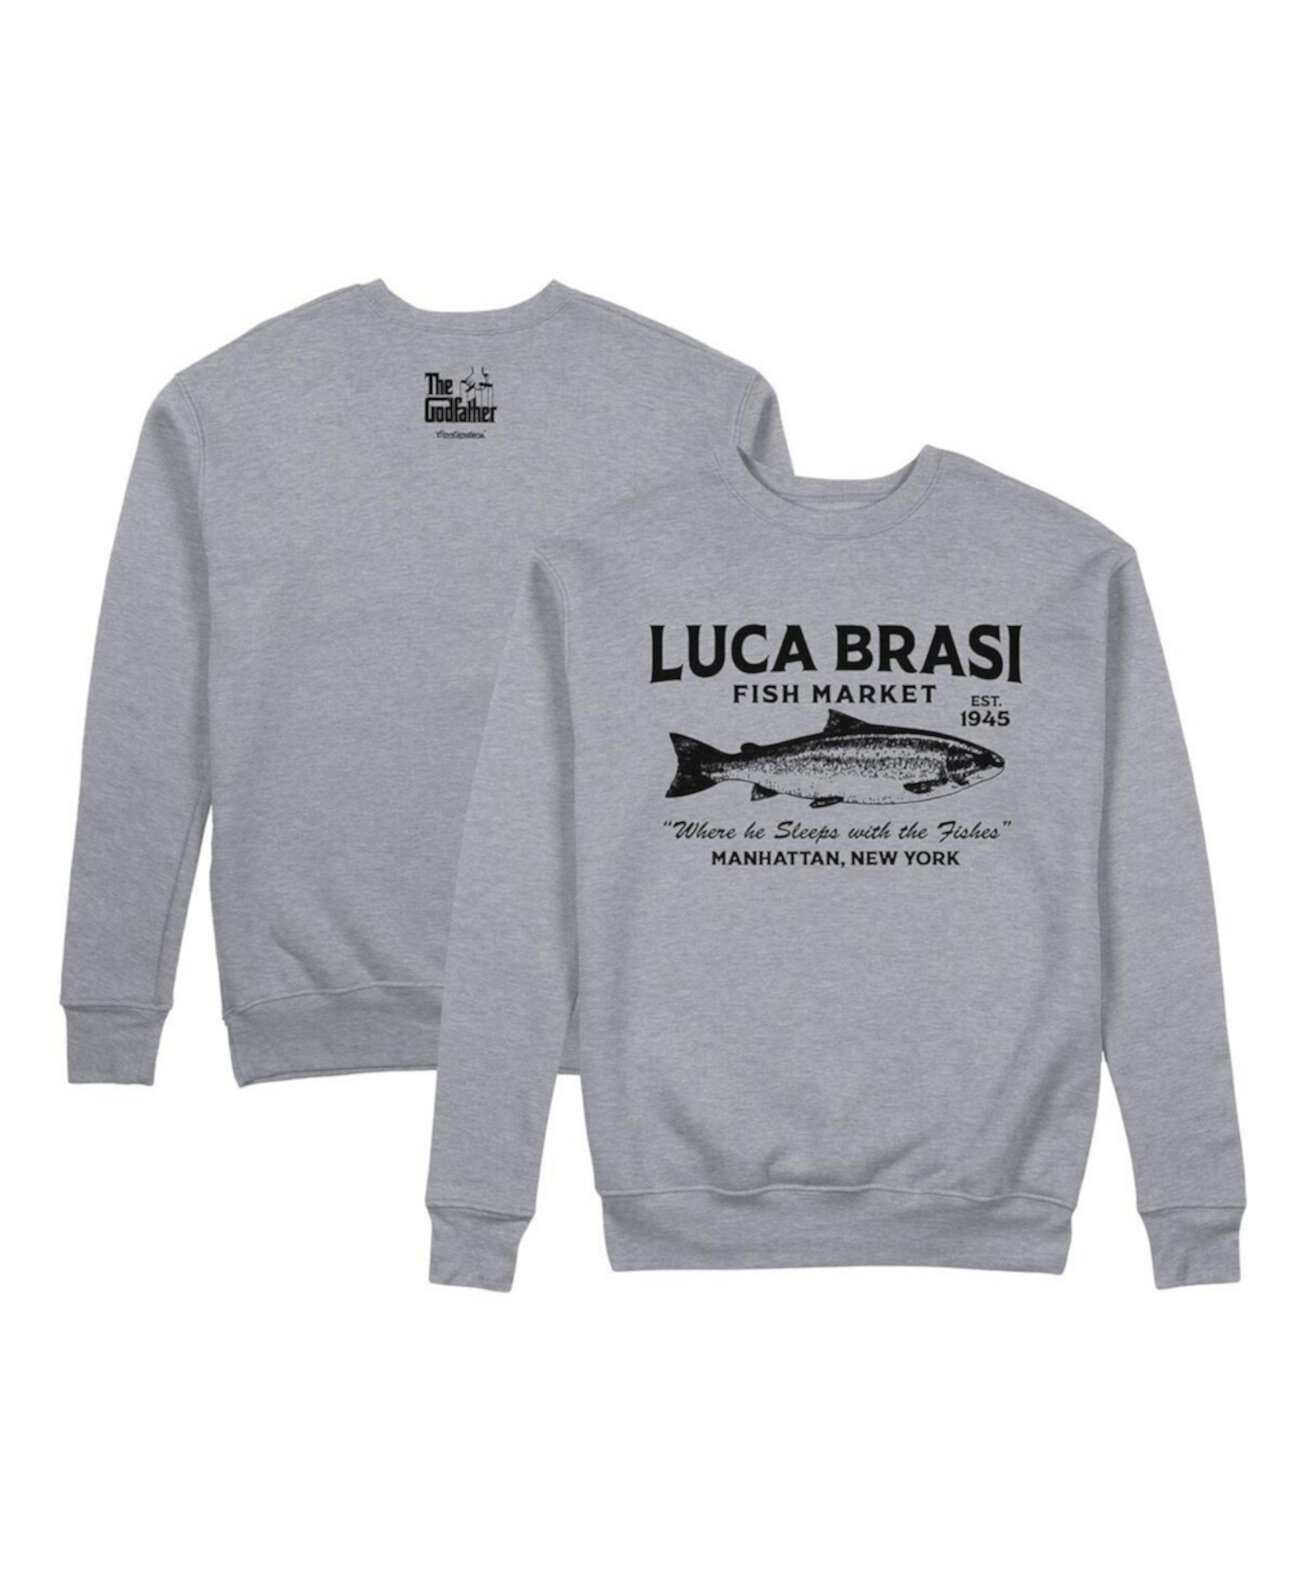 Мужской свитер The Godfather Luca Brasi Fish Market от Contenders Clothing Contenders Clothing